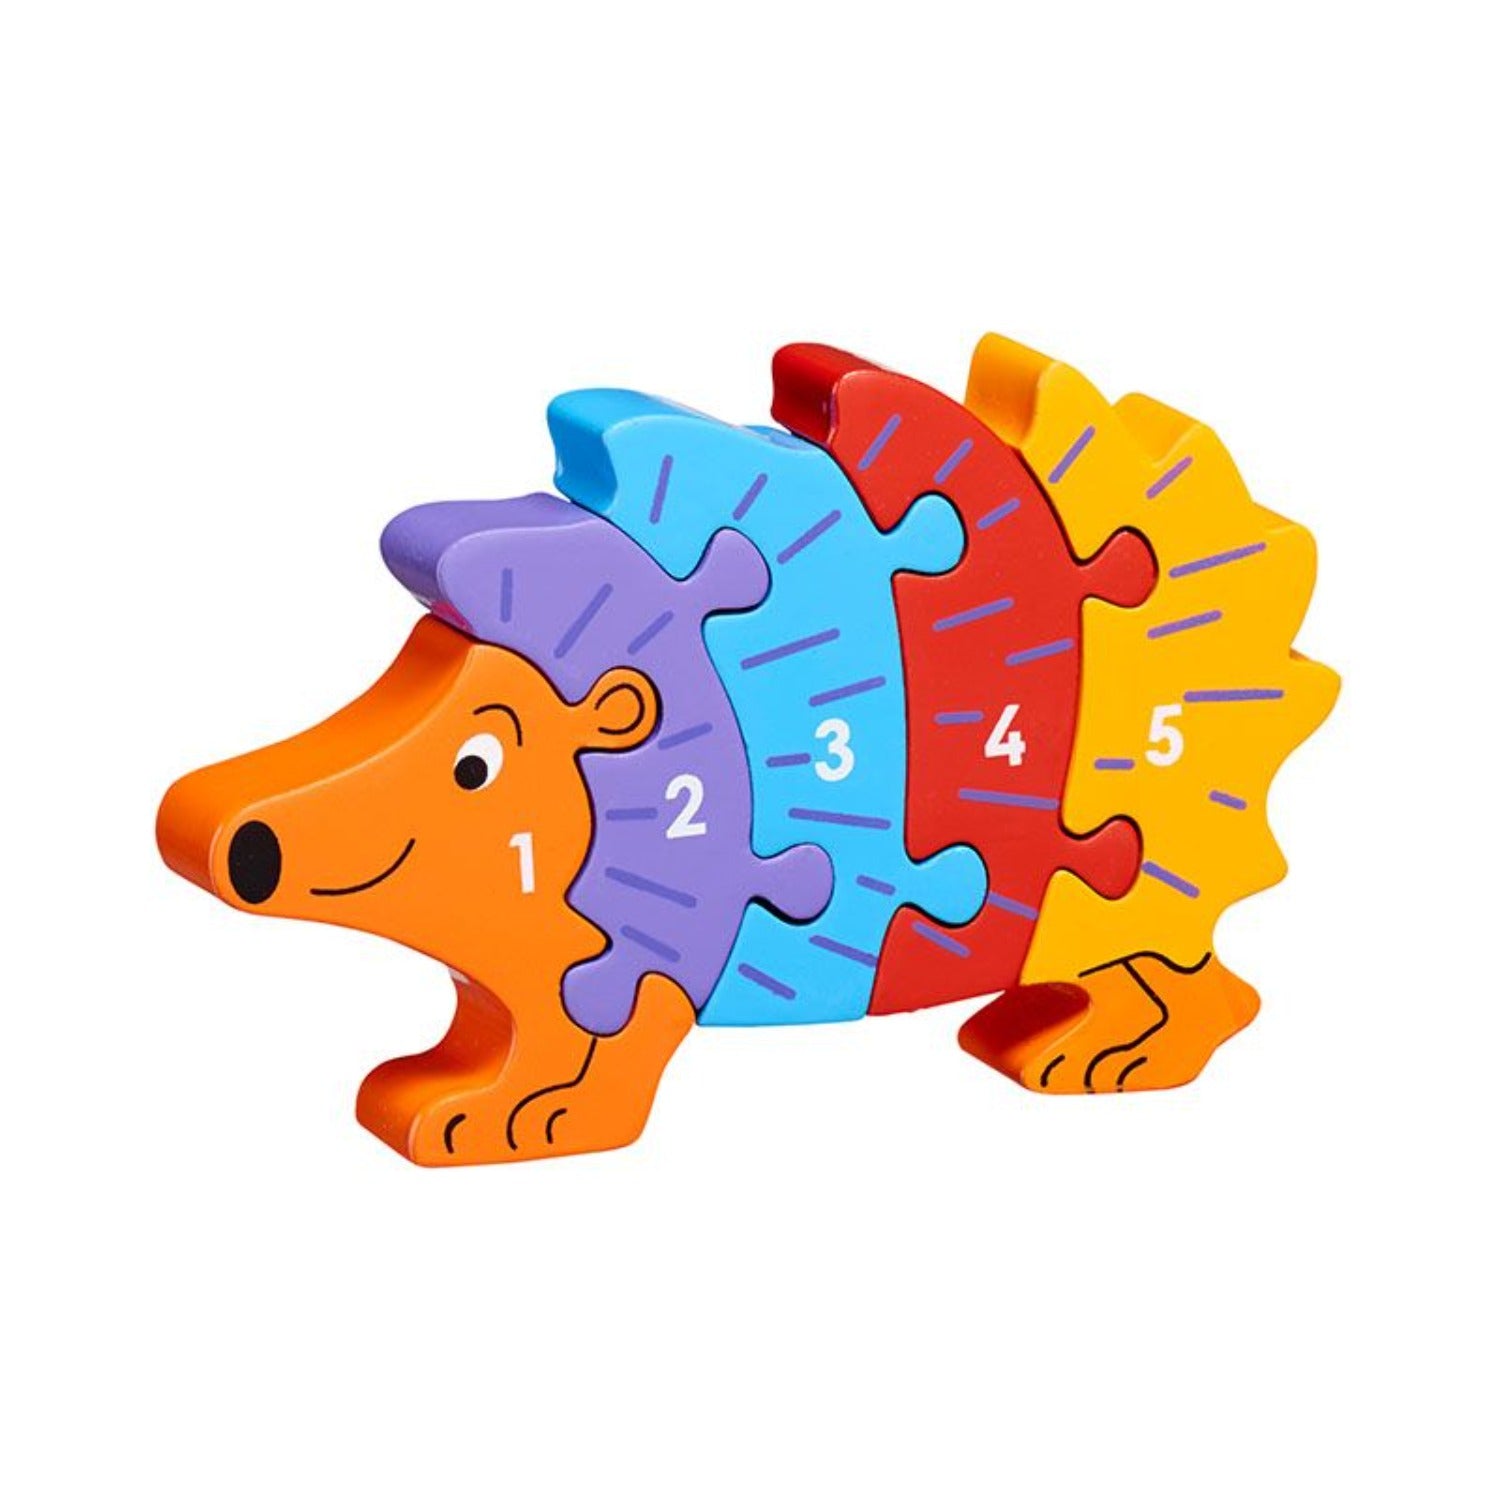 Hedgehog 1-5 Puzzle